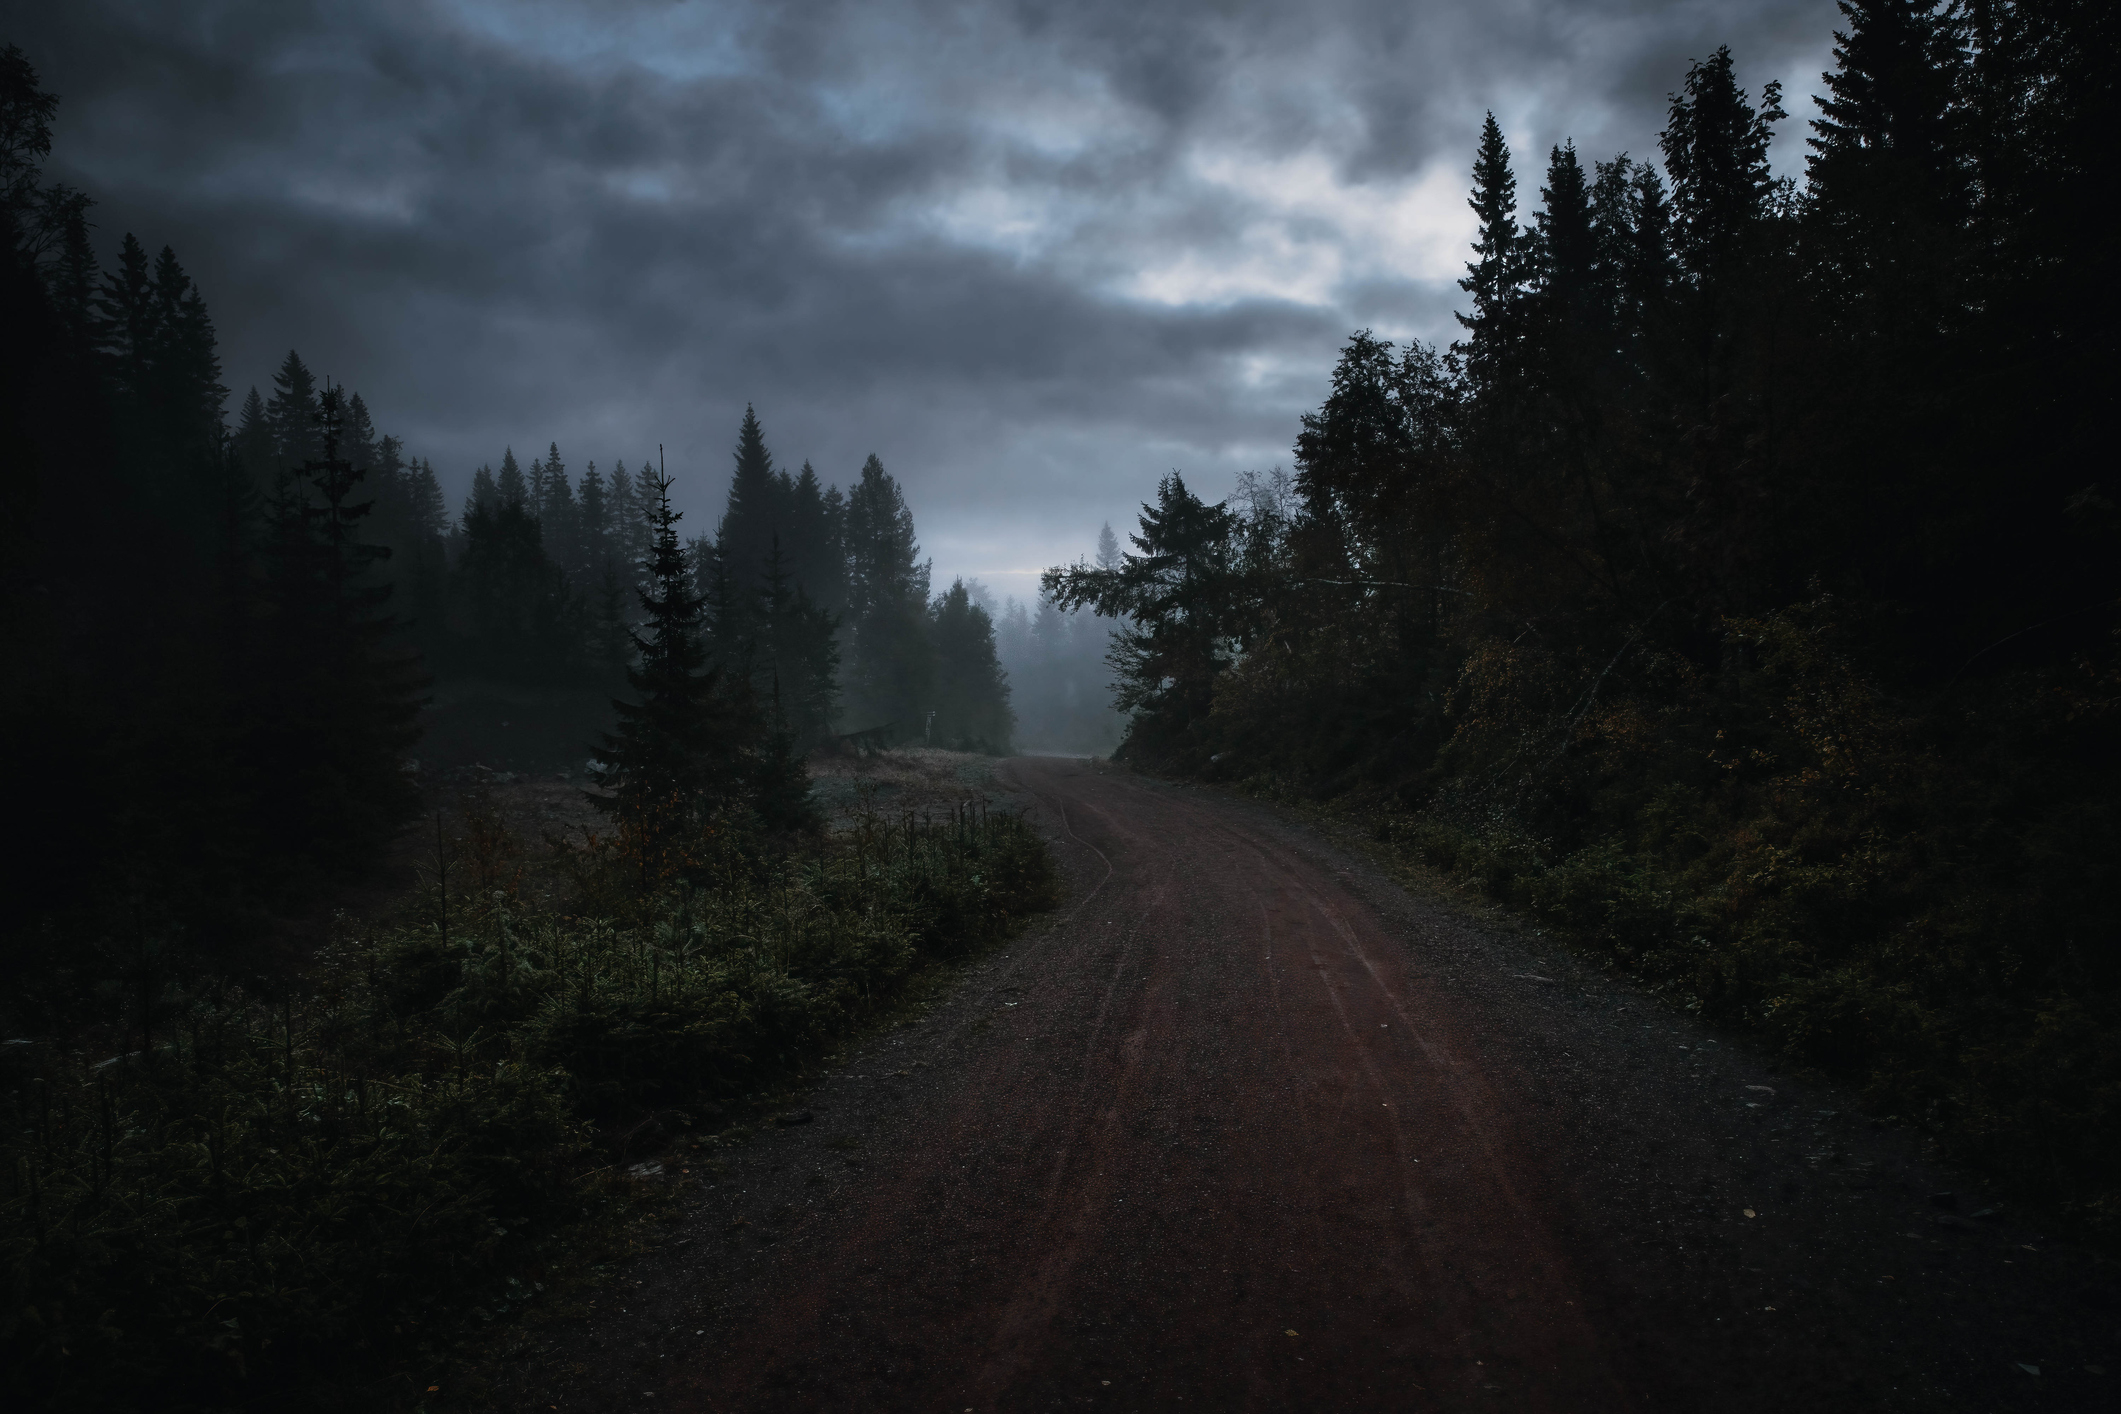 A dirt road through a misty forest